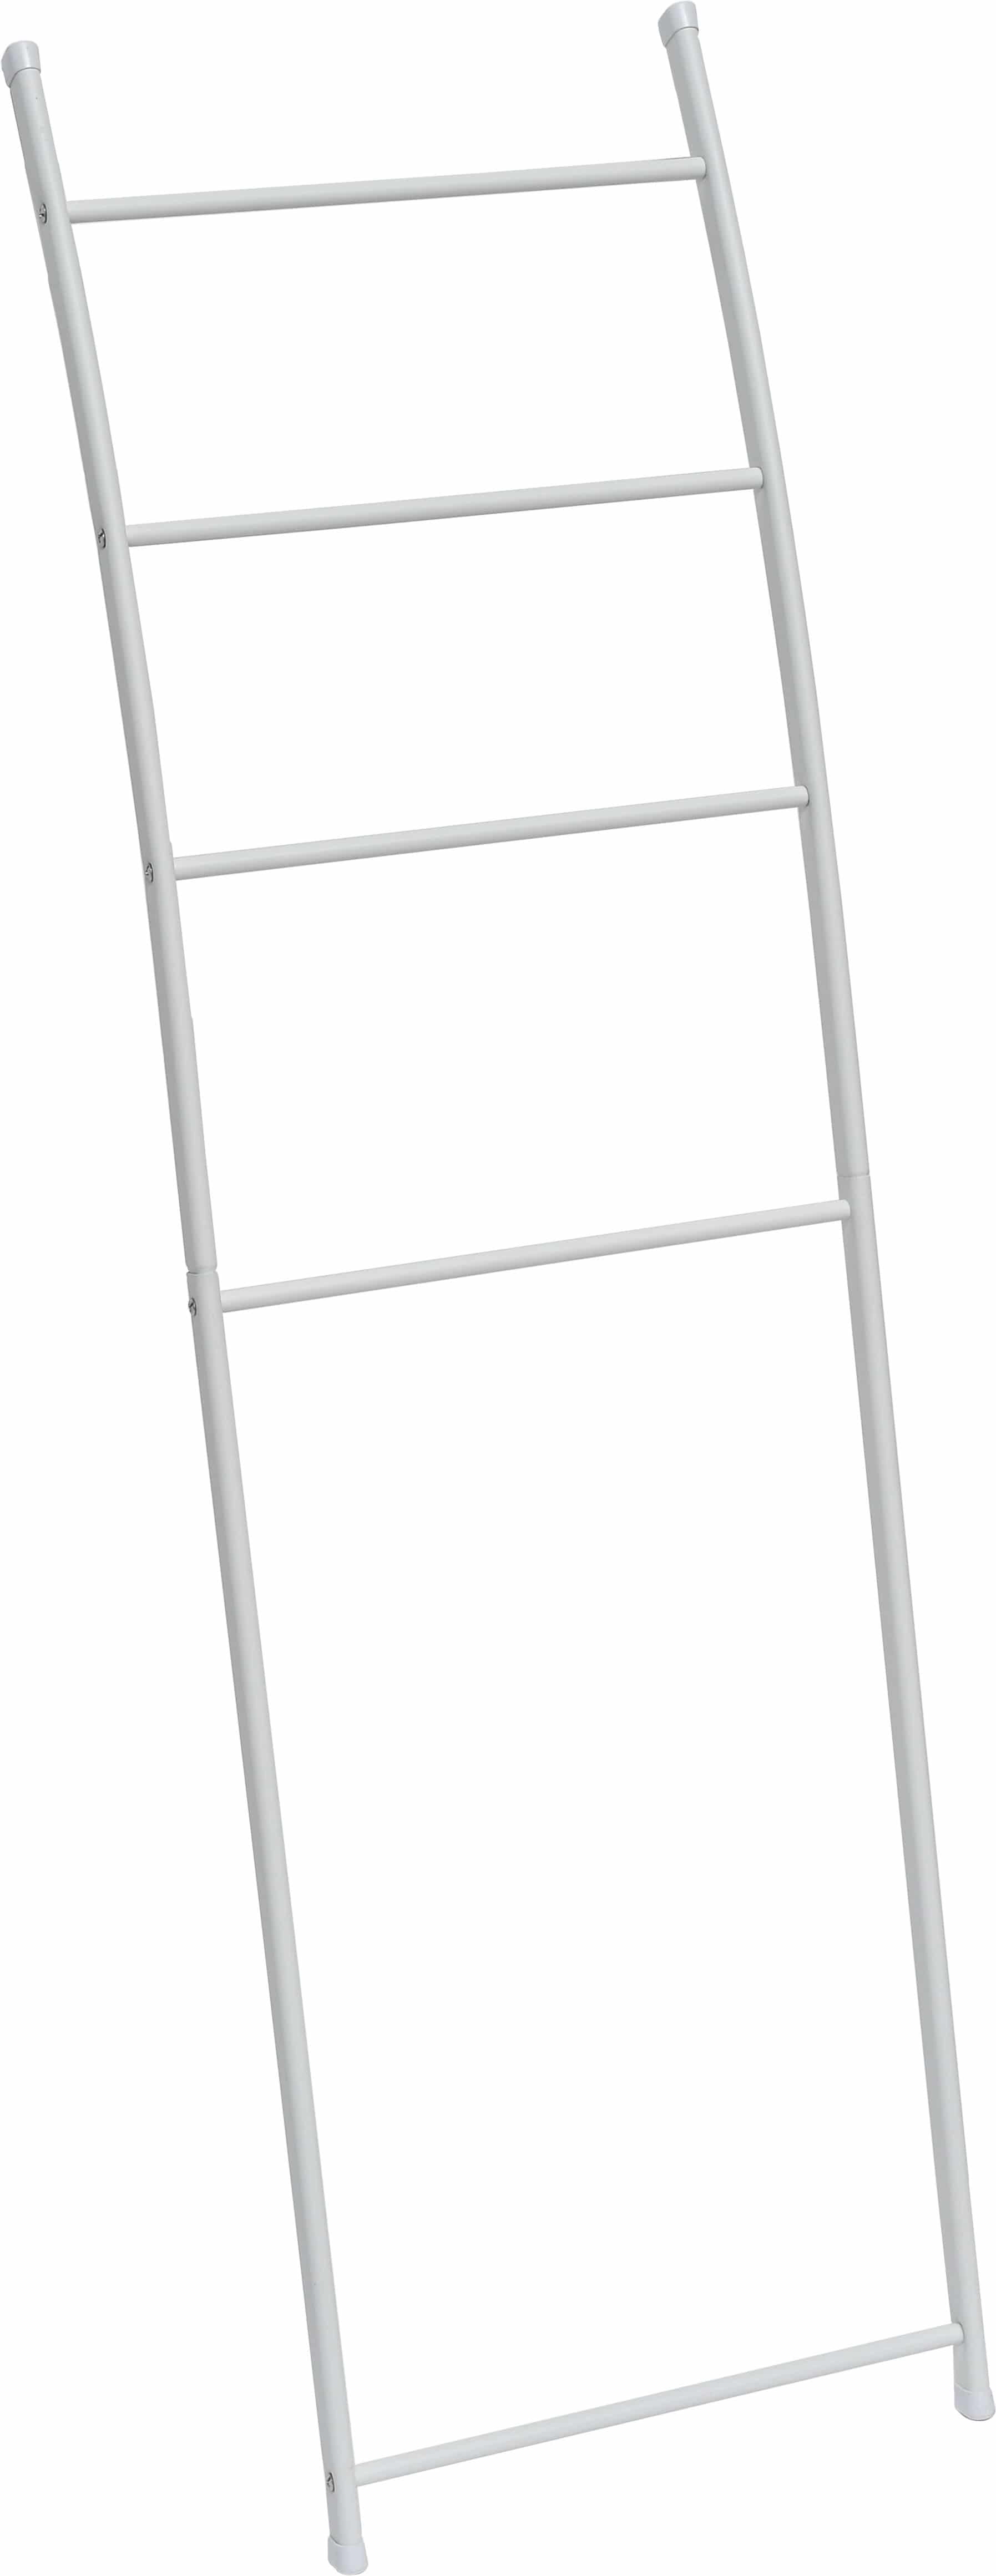 4goodz metalen handdoekhouder ladder 44x150 cm - Wit